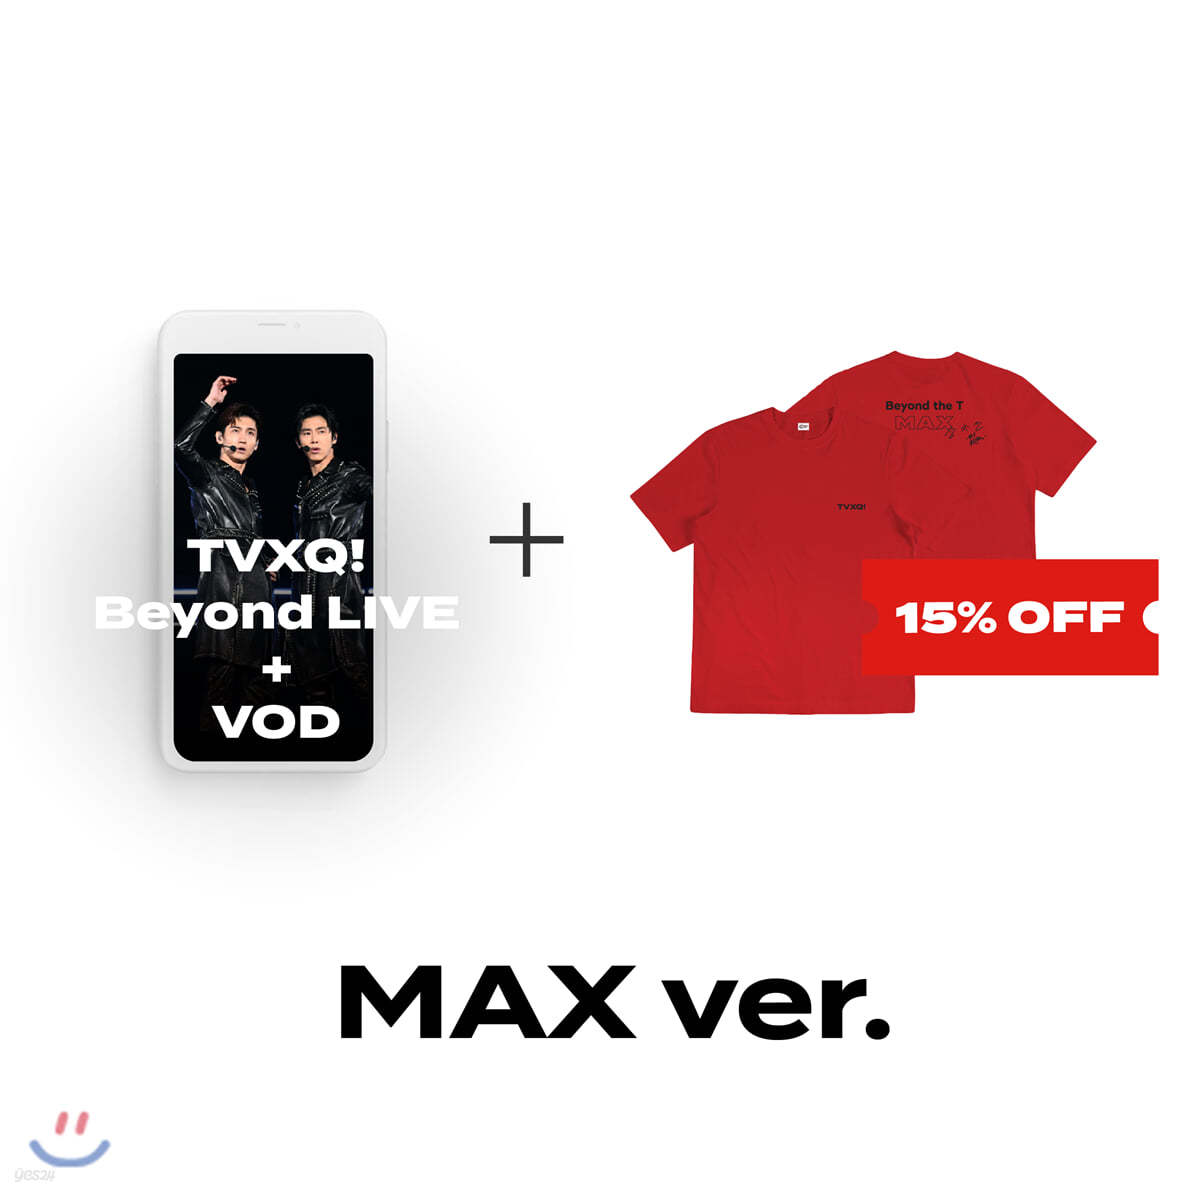 [MAX] TVXQ! Beyond LIVE +VOD관람권 + Beyond the T 티셔츠